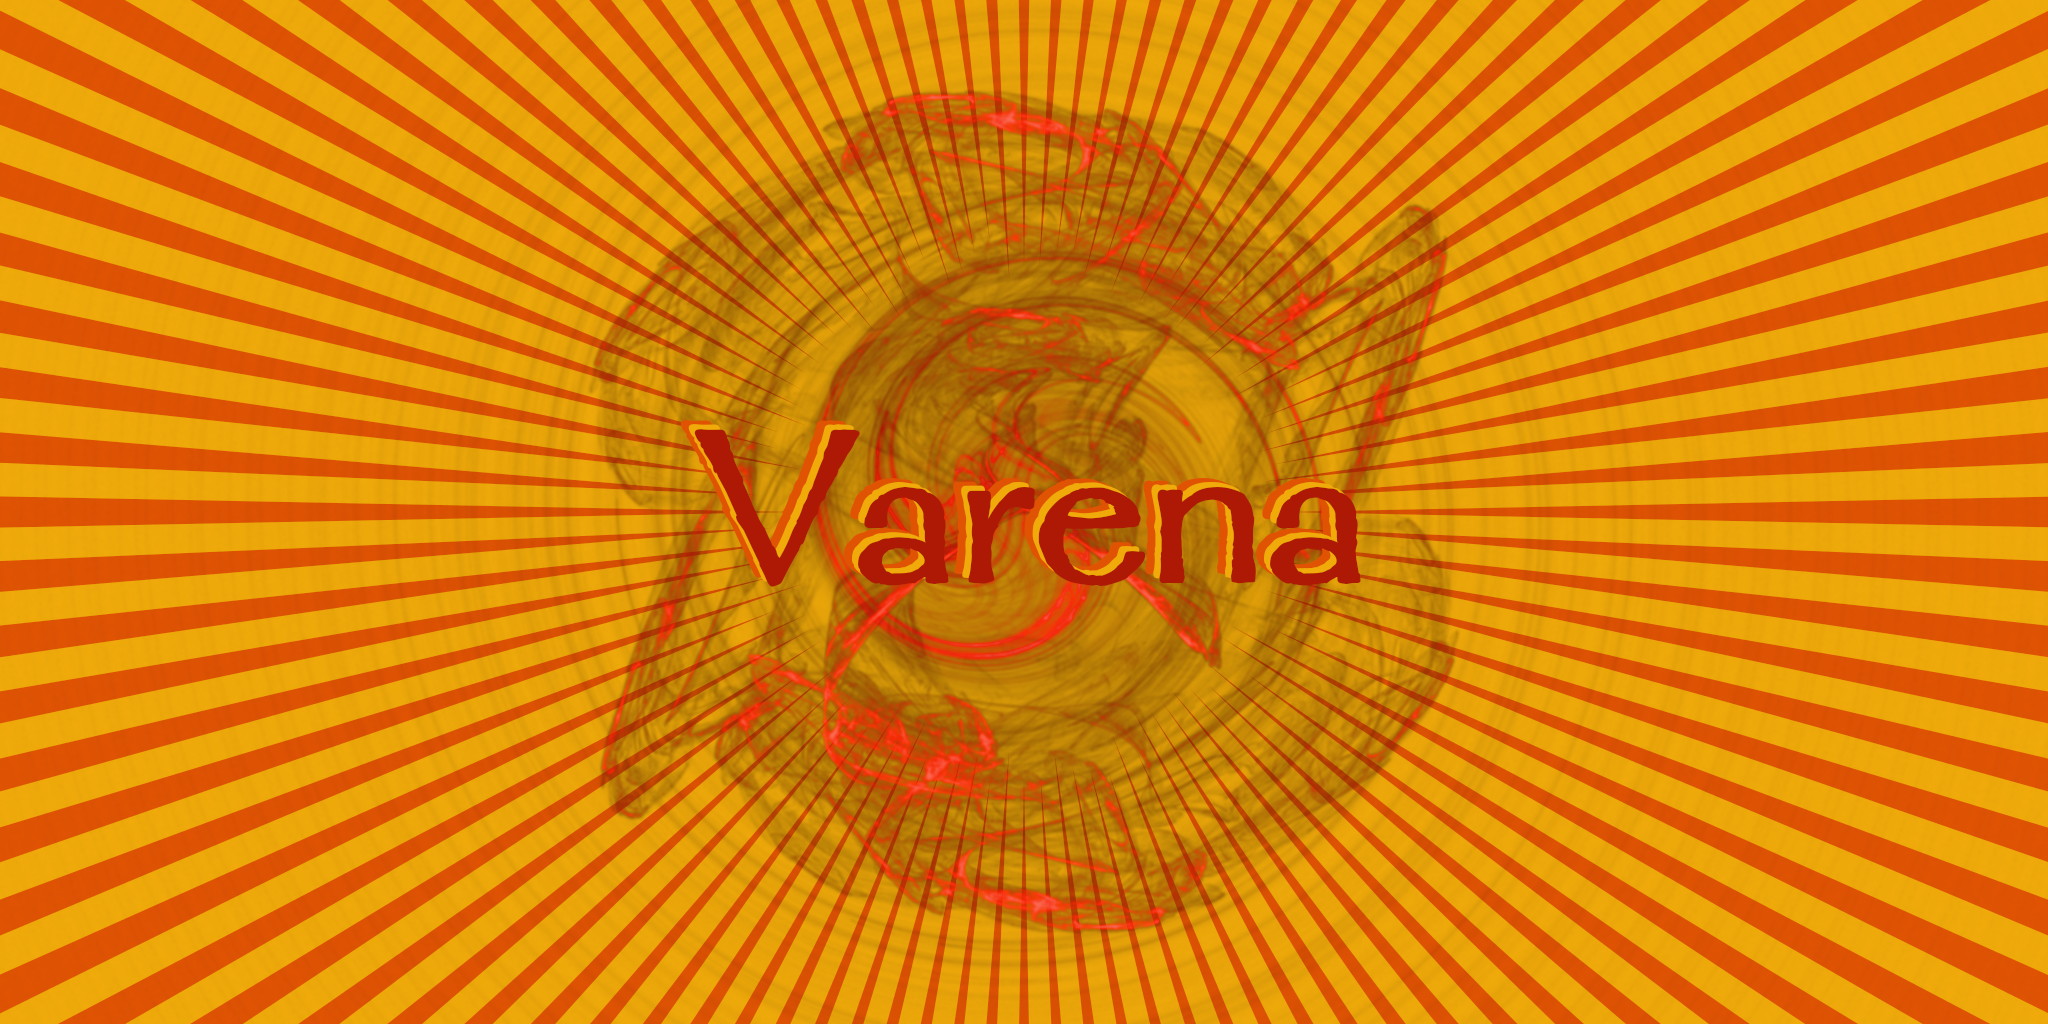 Varena-loadscreen1.png